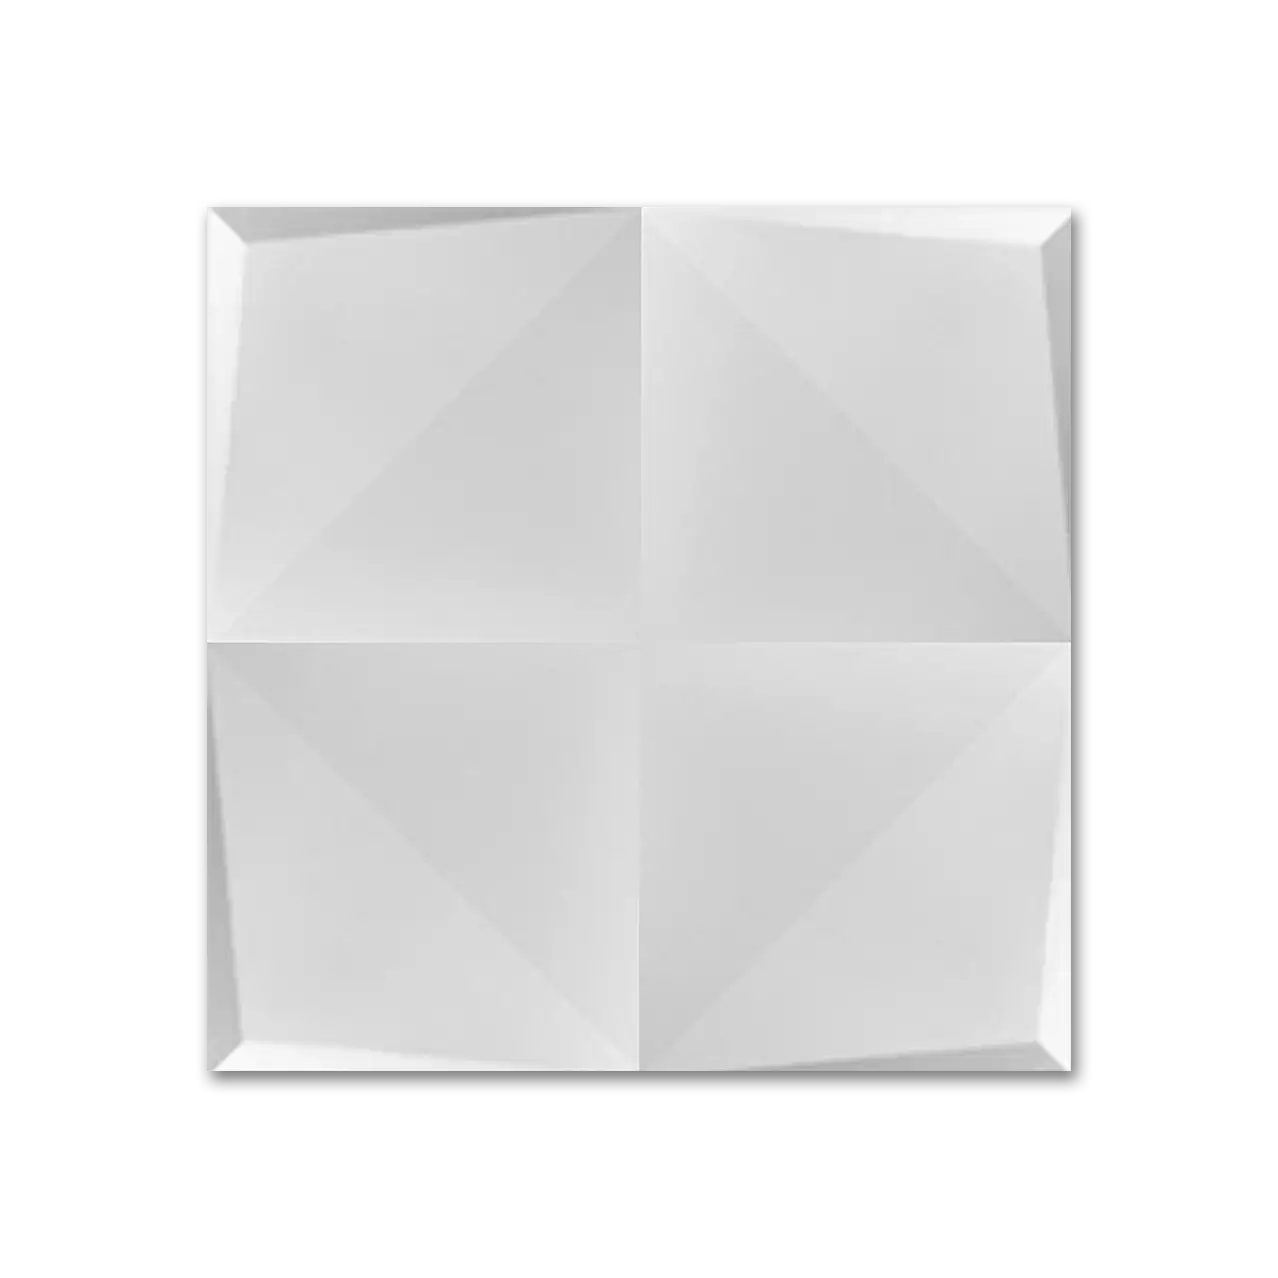 Dimensions Quasar 6”x6” Square White Ceramic Wall Tile Glazed